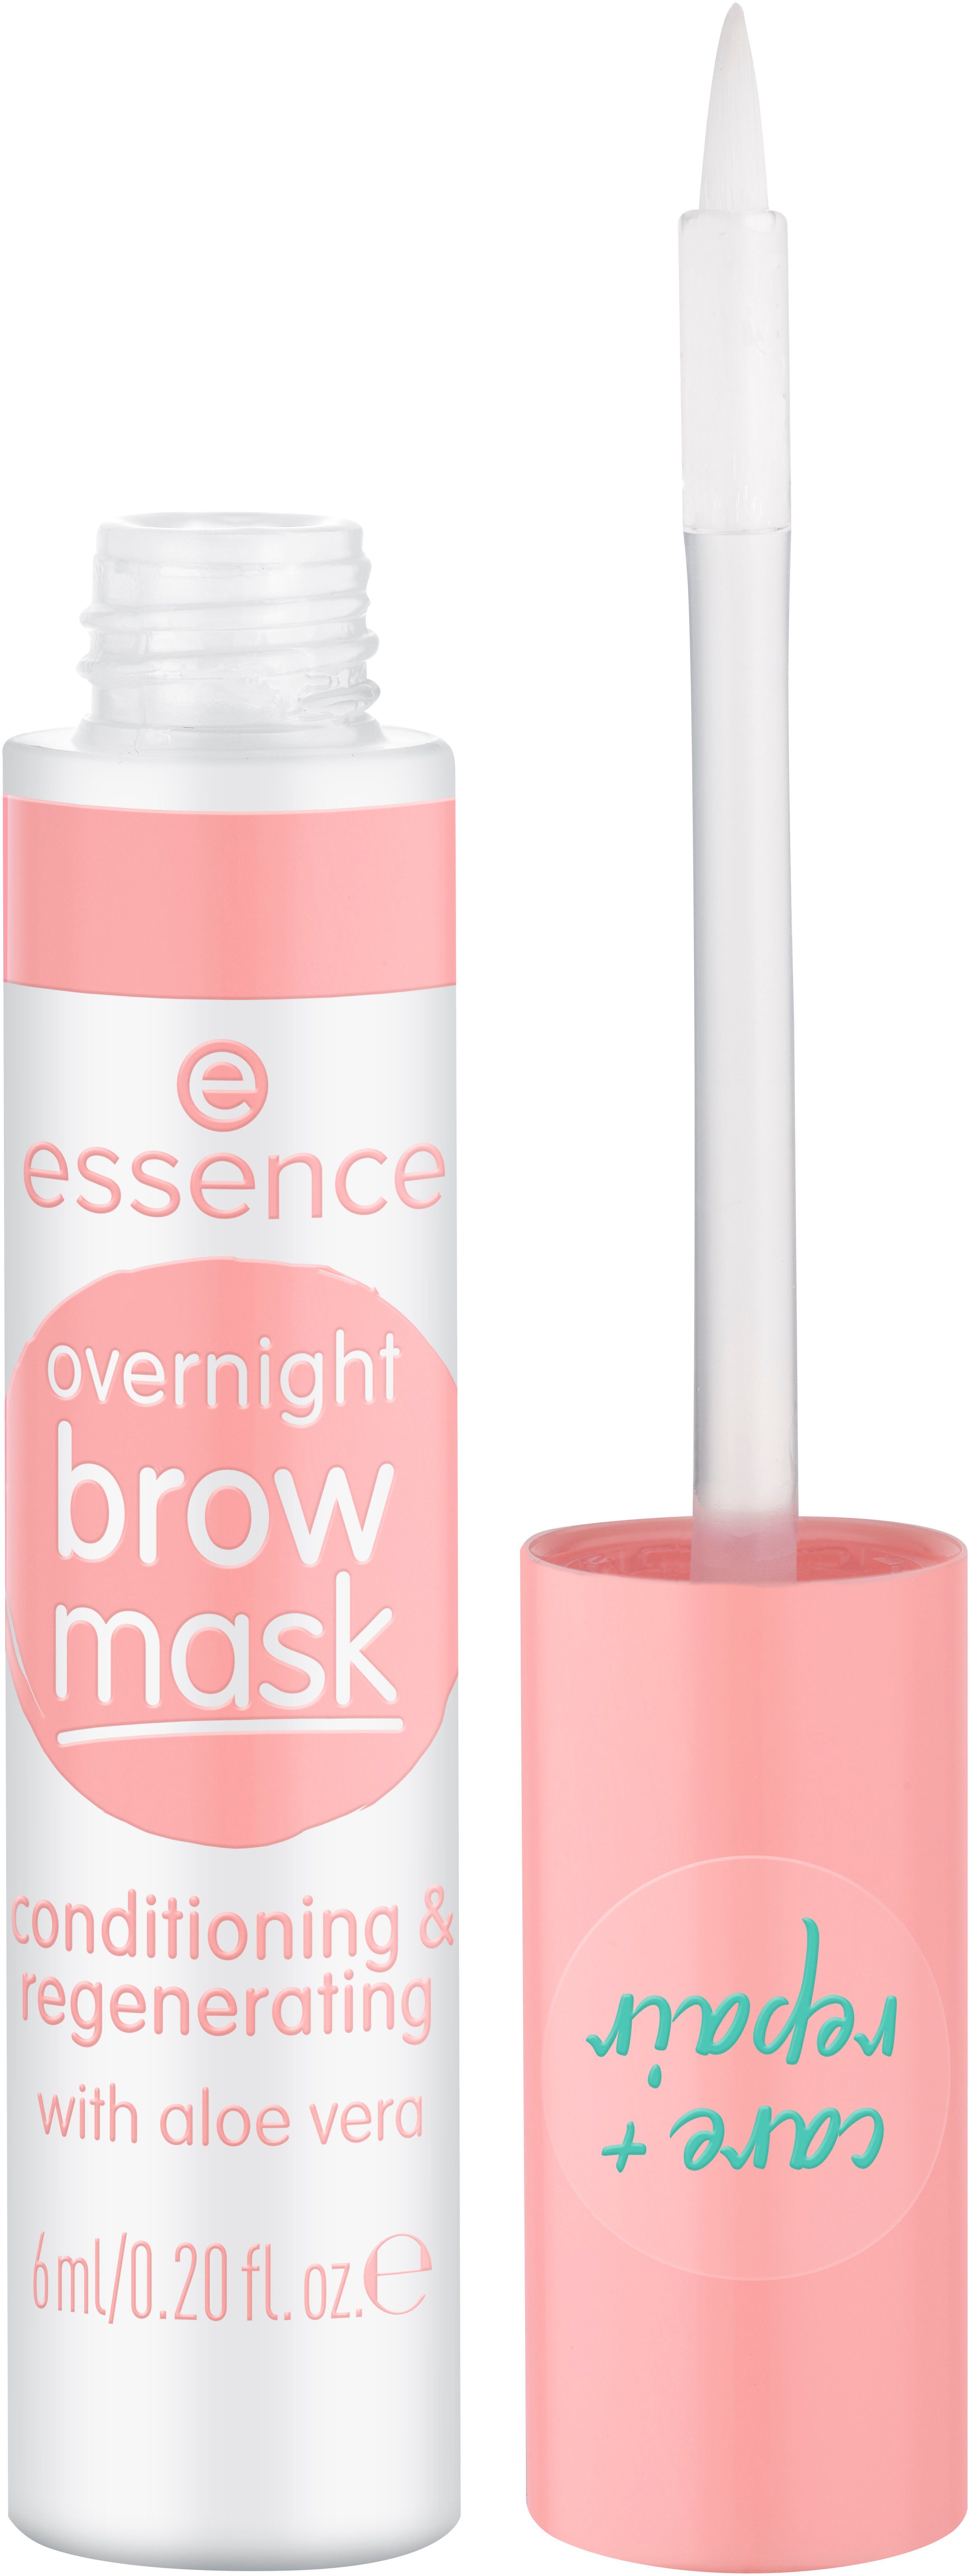 Haushalt Make Up Essence Augenbrauenpflege overnight brow mask, 3-tlg.